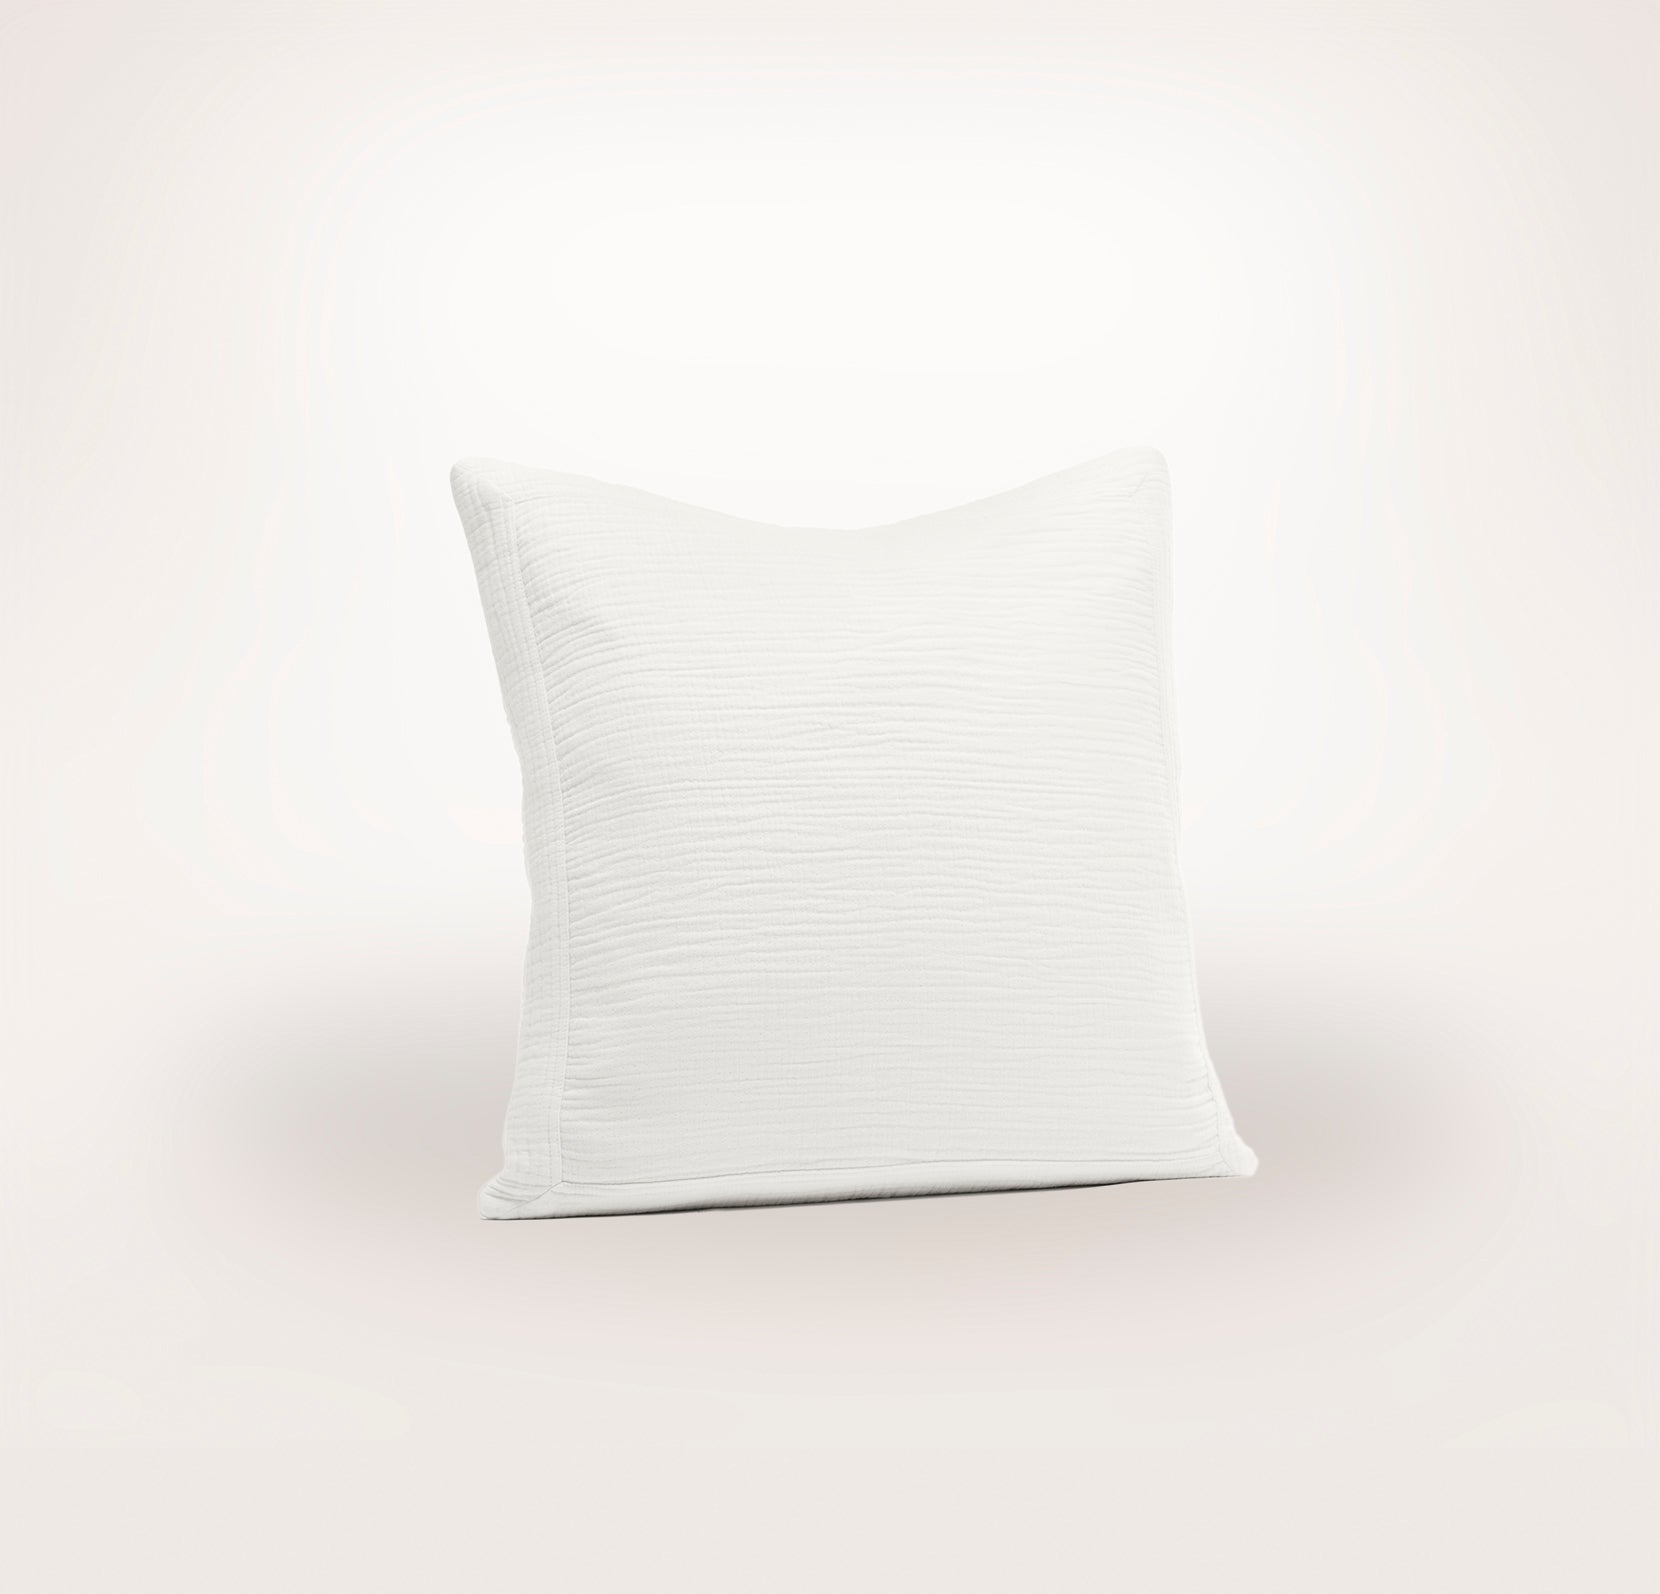 Dream Pillow Cover (20x20) in White